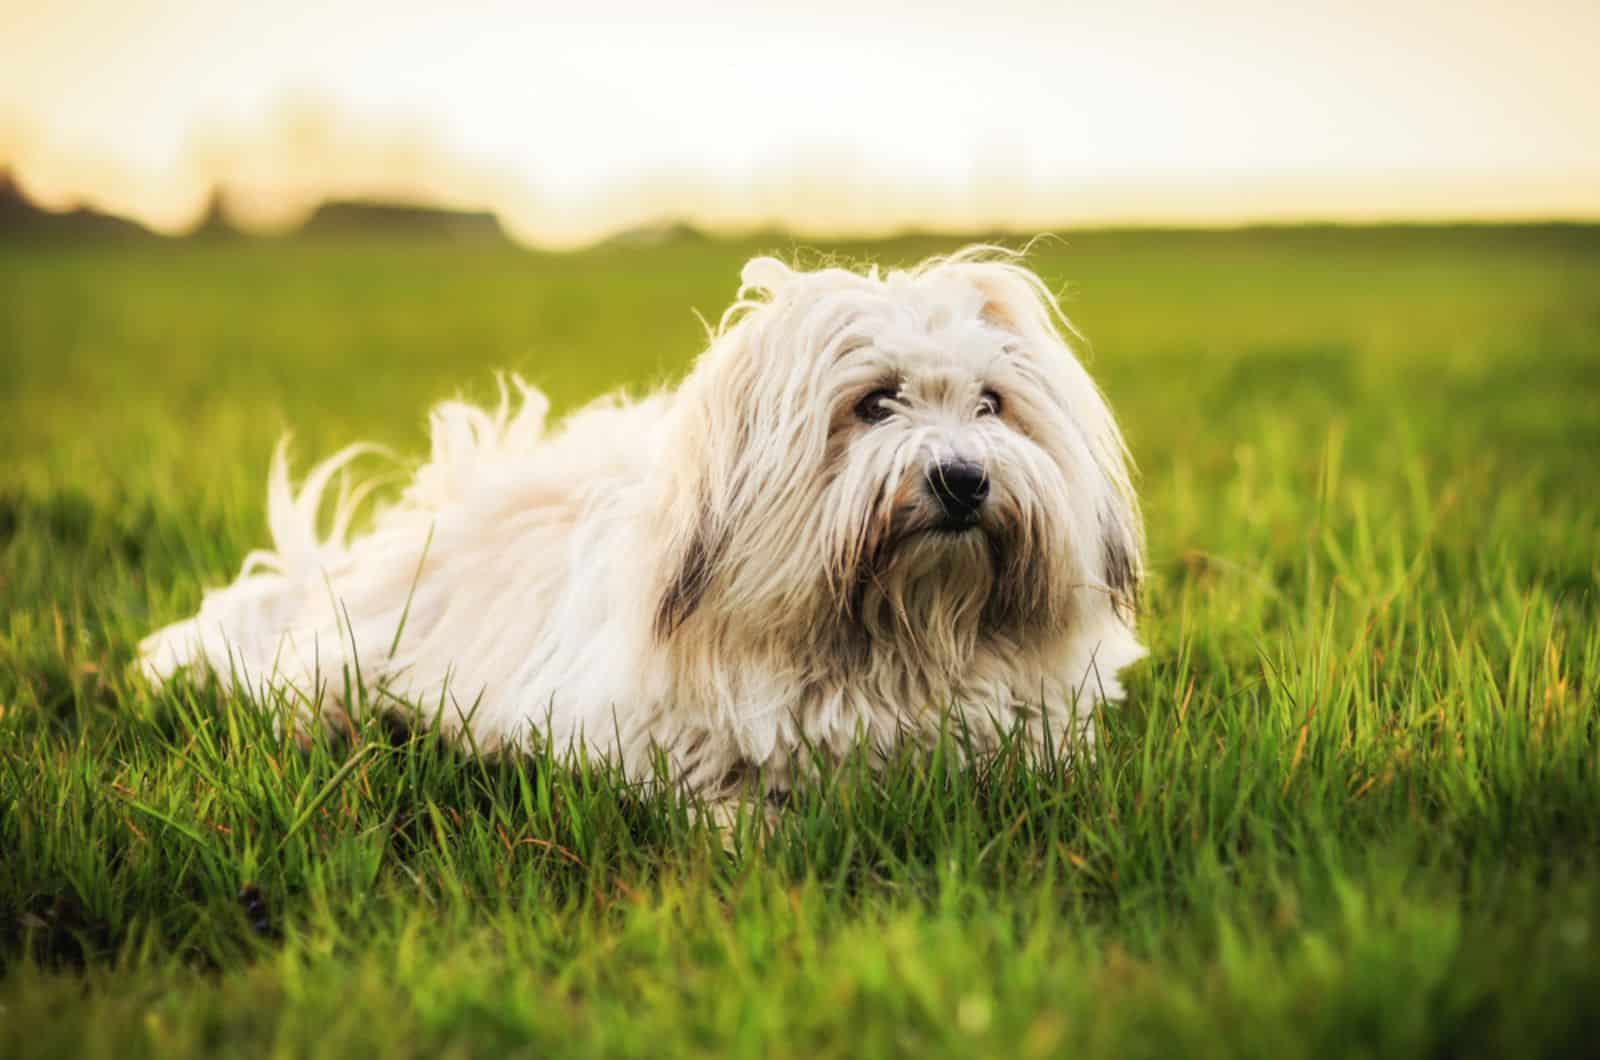 coton de tulear dog lying in the grass